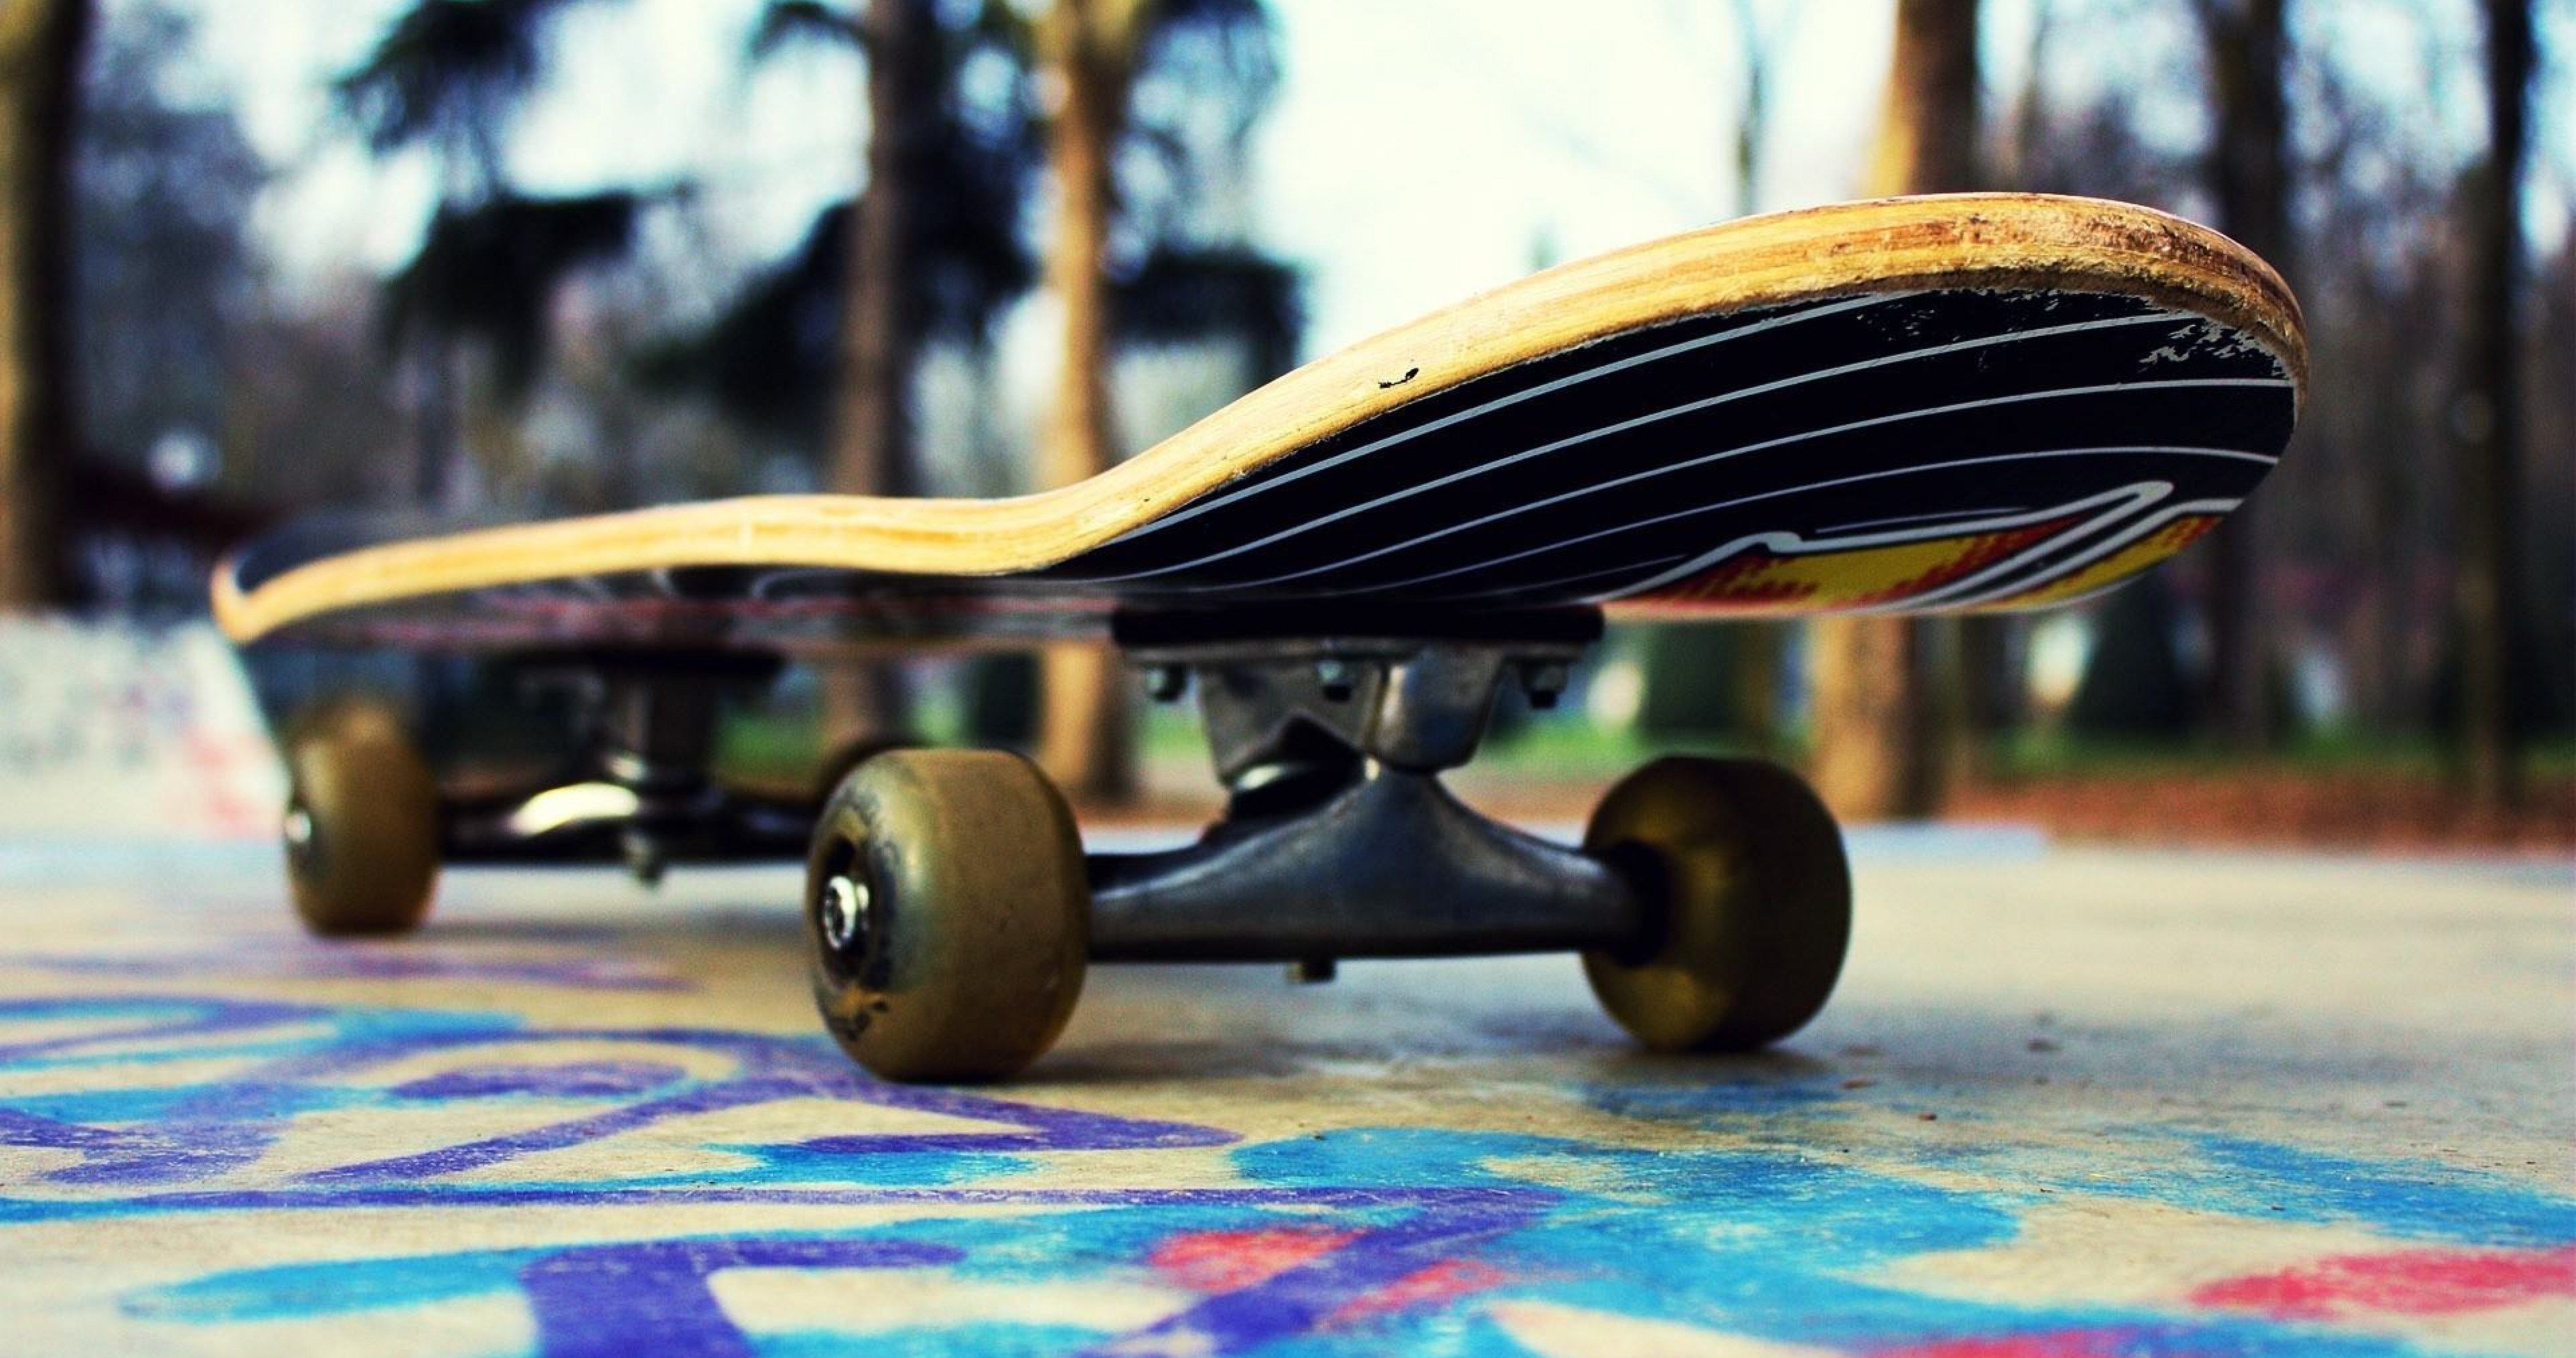 fantastici sfondi per skateboard,skateboard,longboard,longboarding,andare con lo skateboard,attrezzatura sportiva